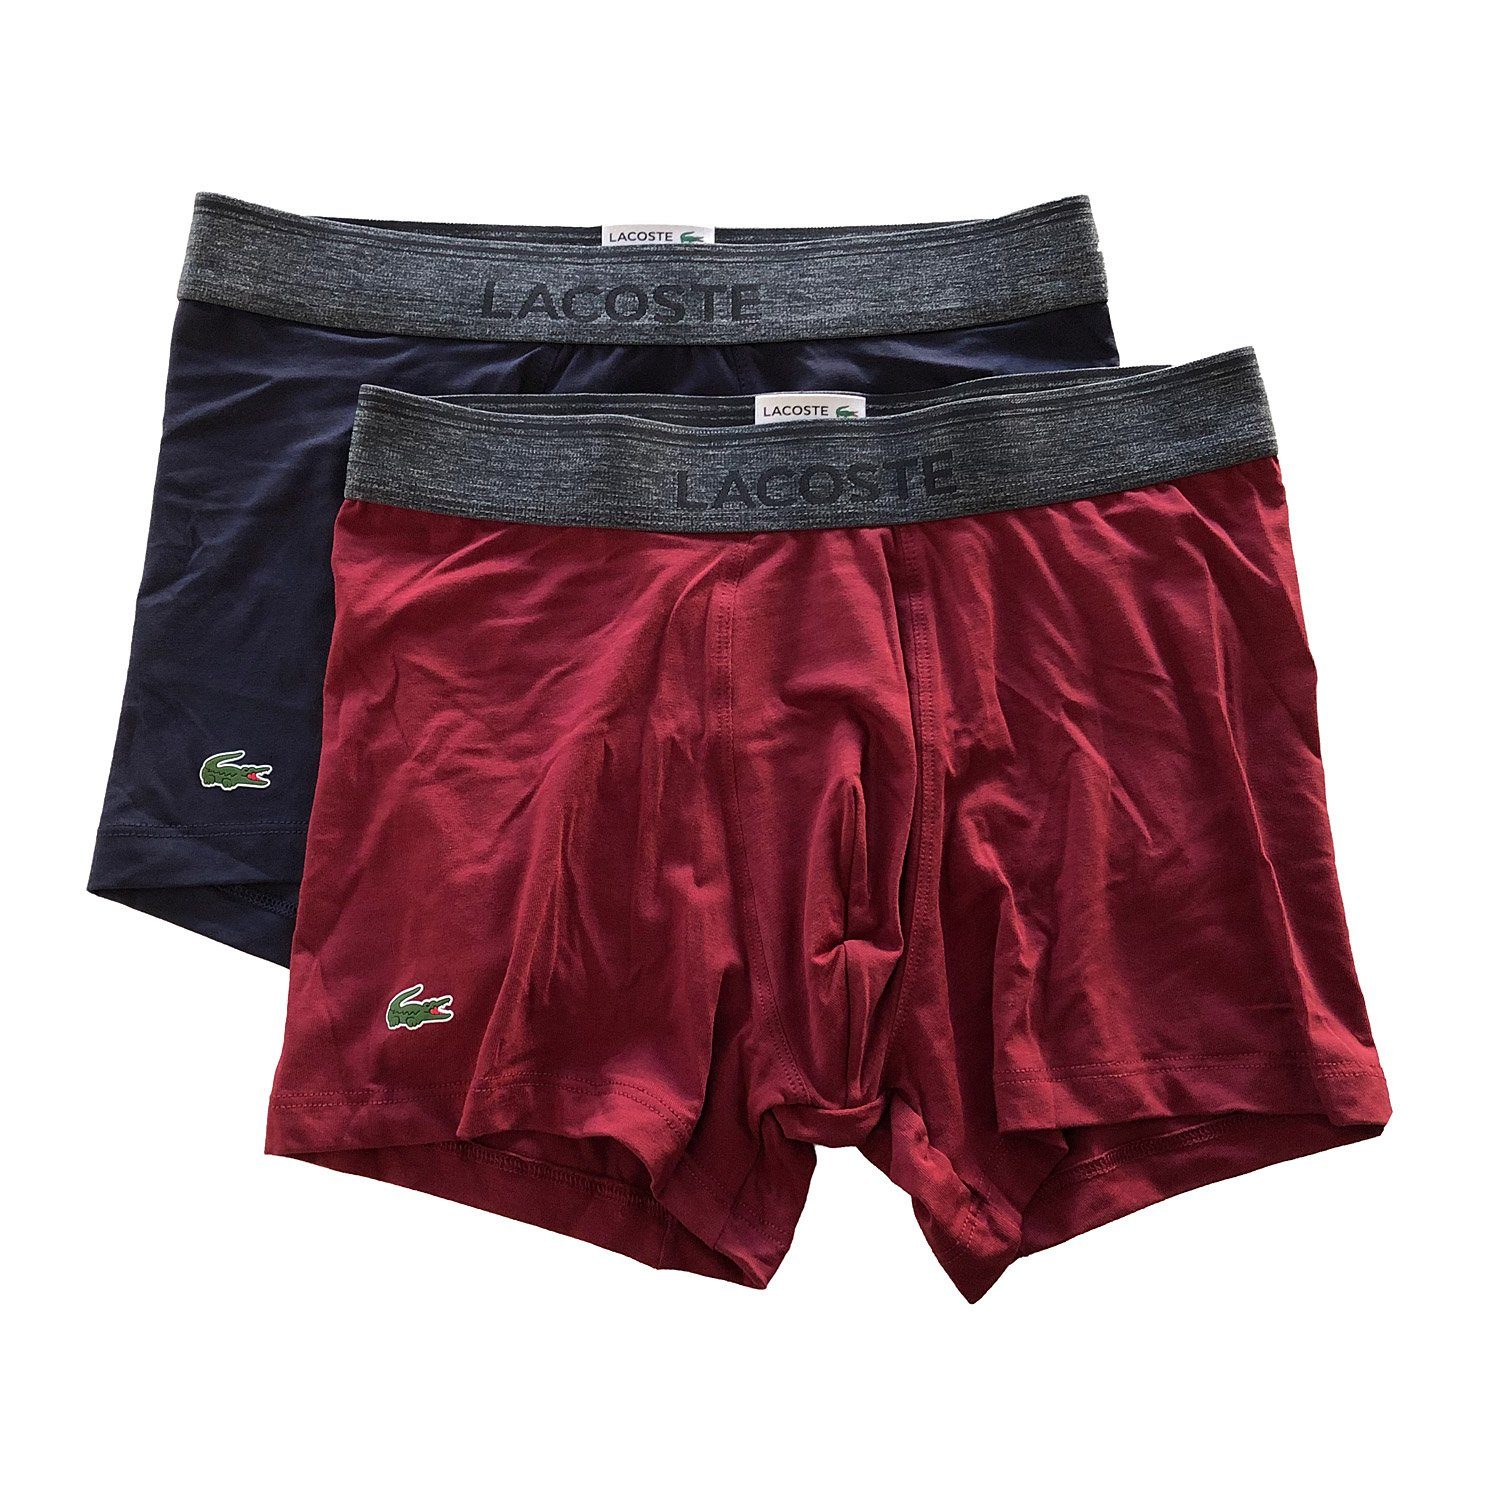 Lacoste Trunk Cotton Modal Serie (Doppelpack, 2-St., 2er-Pack) Baumwolle Modal Unterhosen Shorts kurzes Bein im Doppelpack dunkelblau-dunkelrot (909)